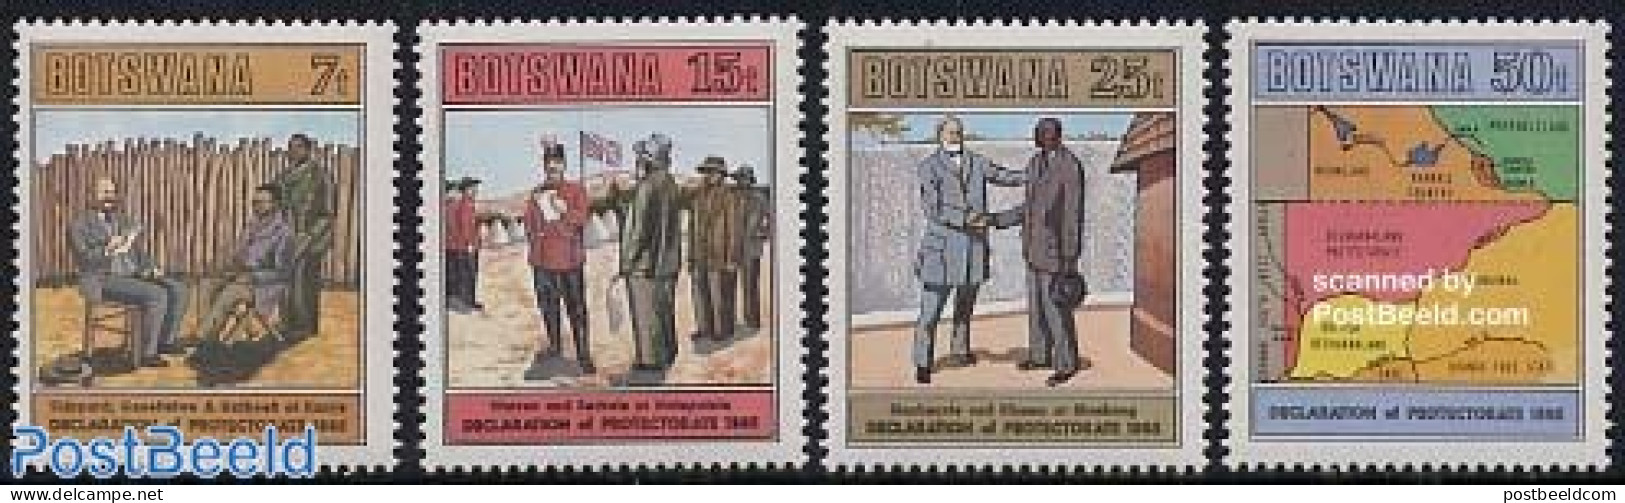 Botswana 1985 Bechuanaland Protectorate 4v, Mint NH, History - Various - History - Maps - Uniforms - Aardrijkskunde